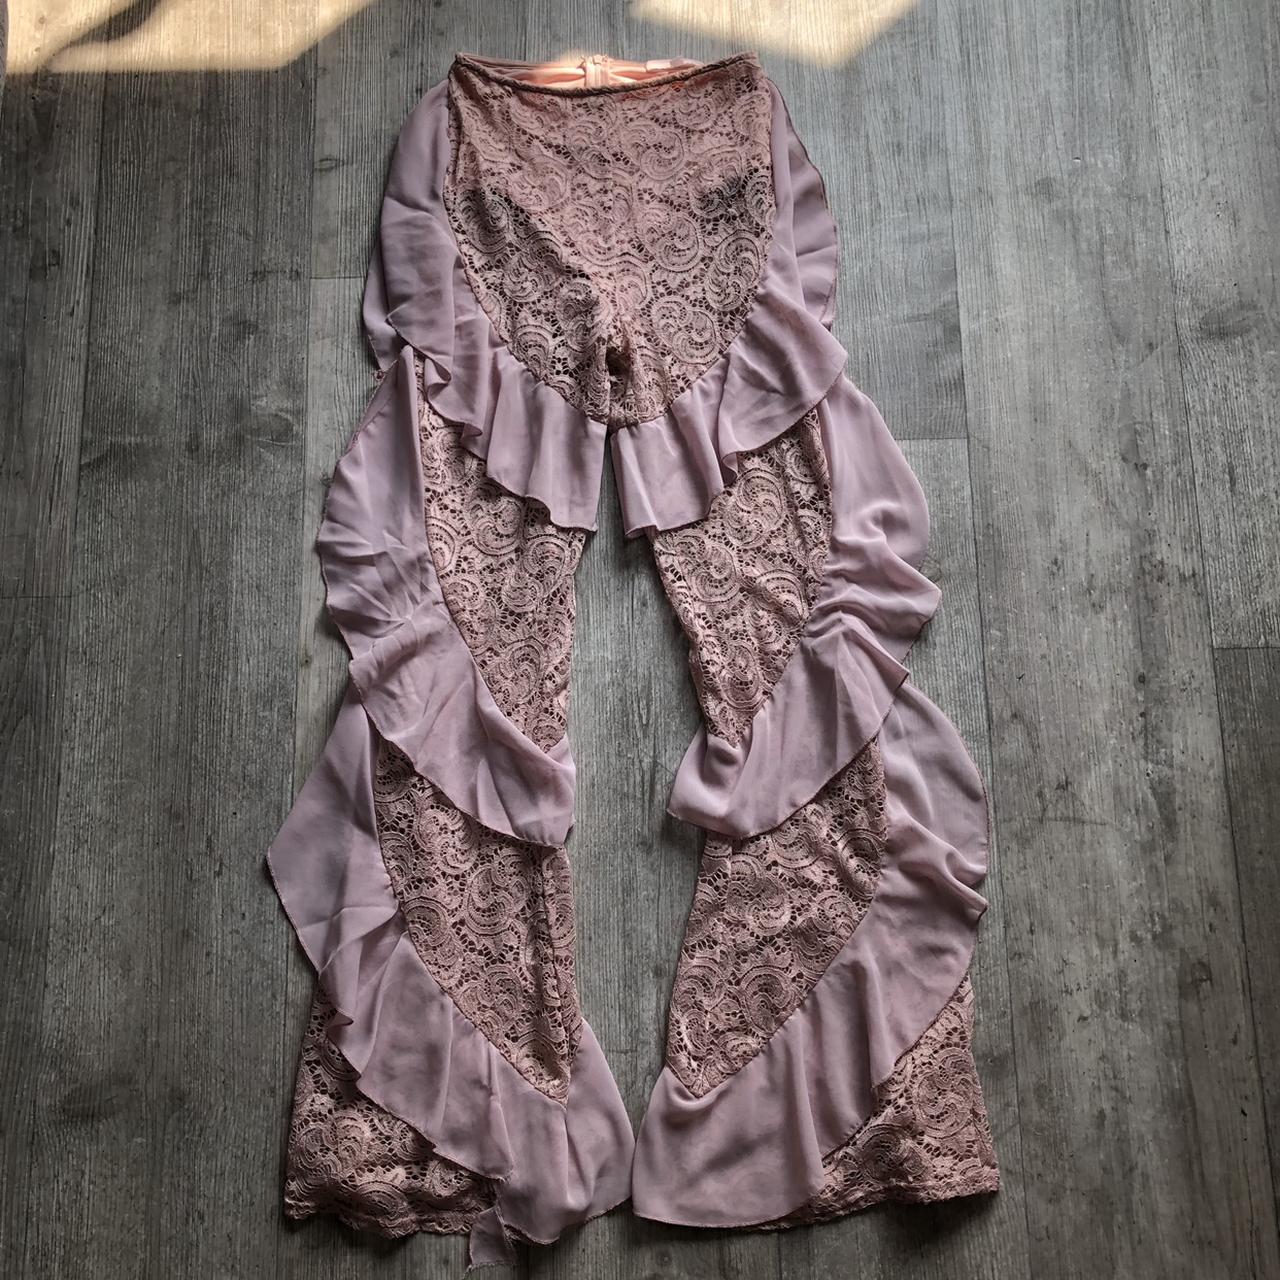 CARLI BYBEL MISSGUIDED Lace Ruffle Pants Size 14 £2.20 - PicClick UK